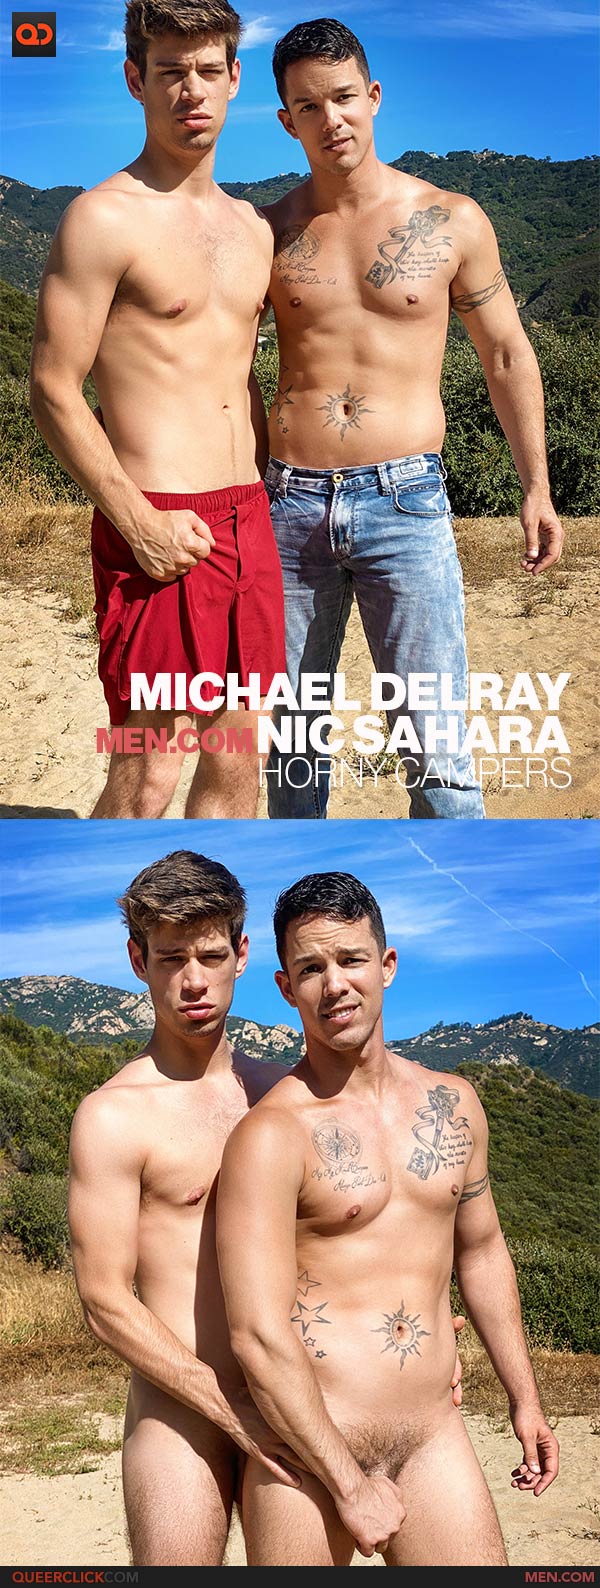 Men.com: Michael DelRay and Nic Sahara